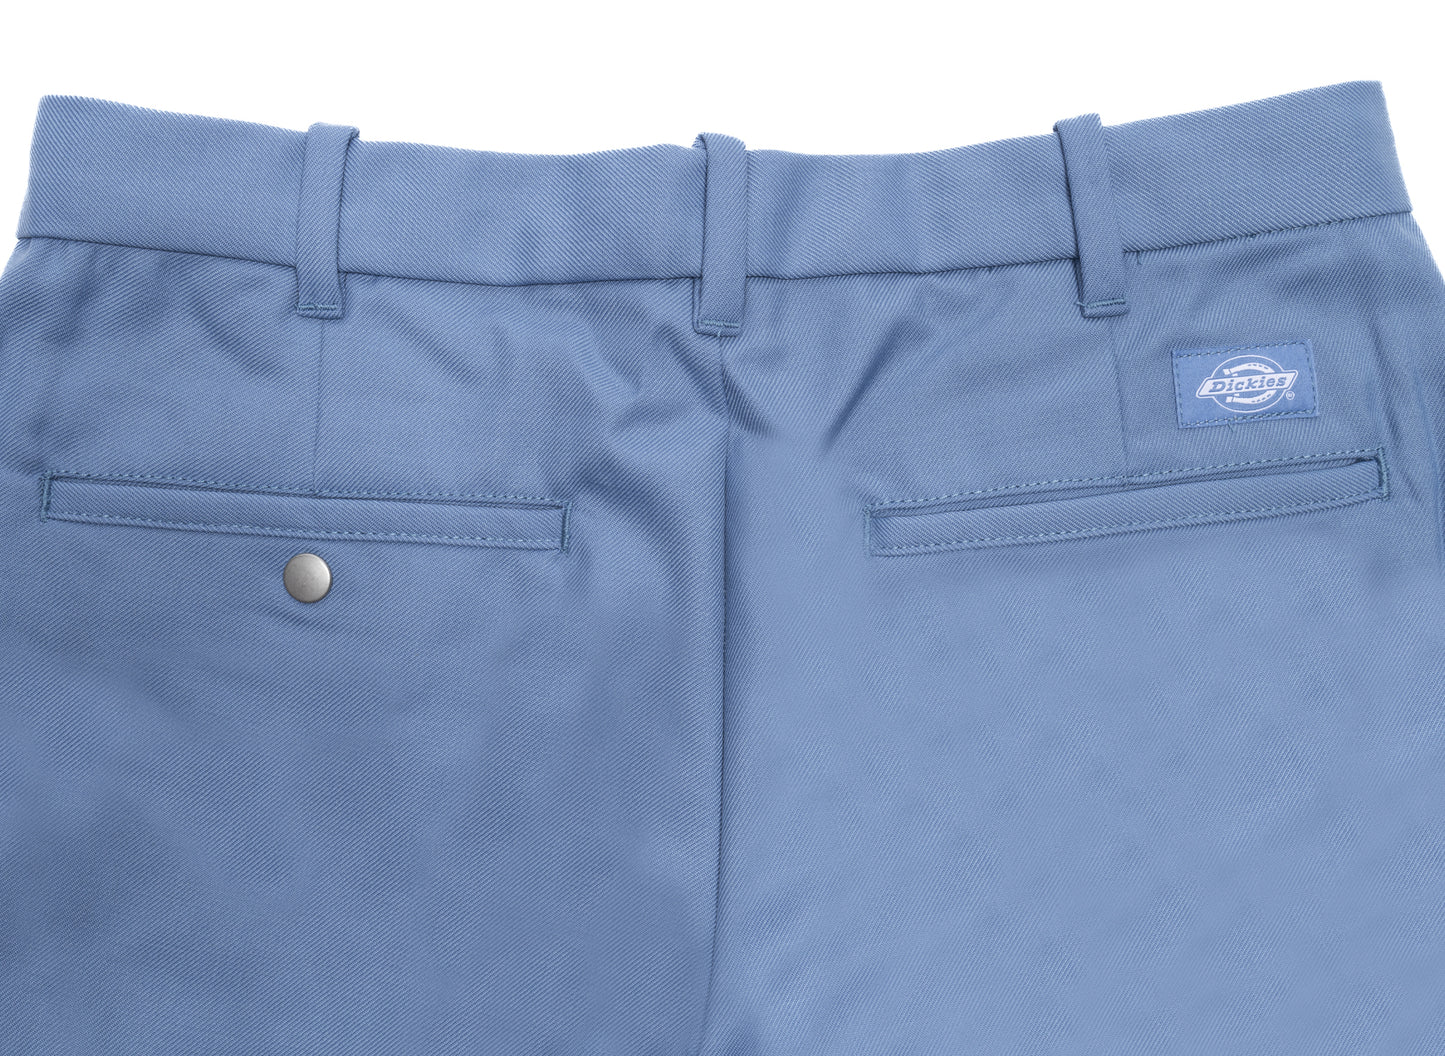 Dickies Pleated 874 Pants in Ashleigh Blue